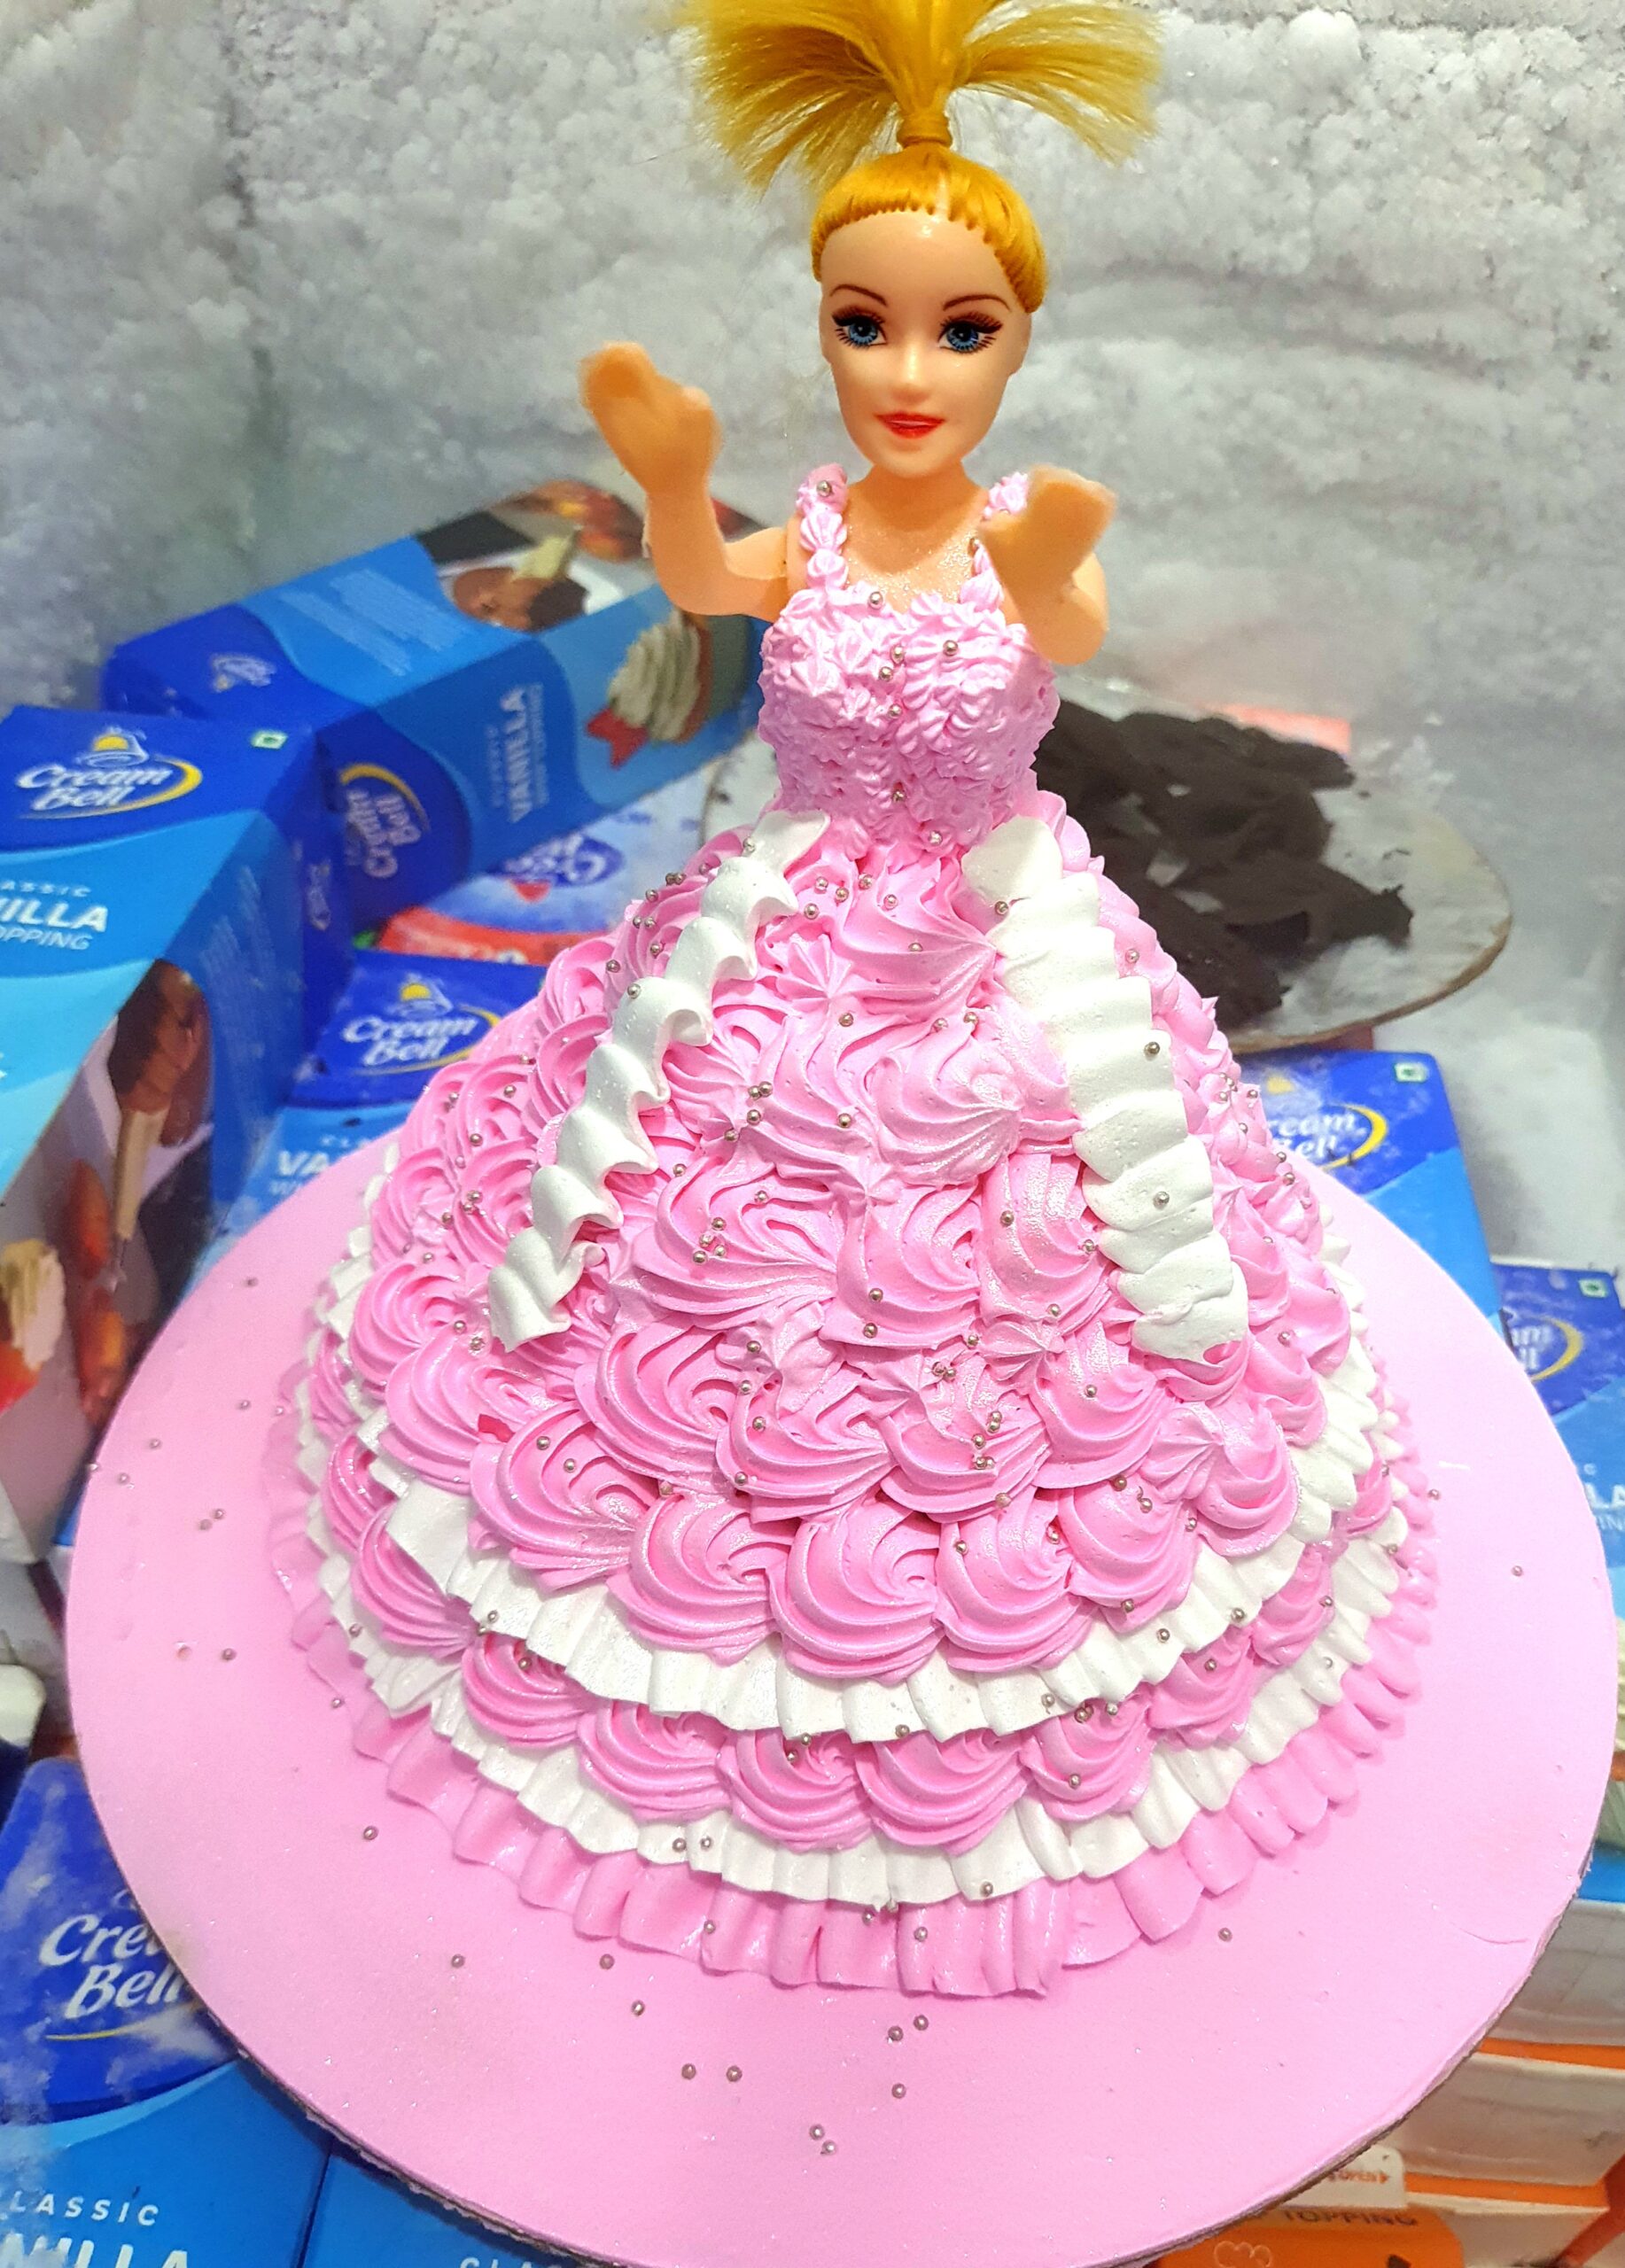 Amazing Fondant Princess Cakes Tutorials | Beautiful Barbie Doll Cake Ideas  | So Tasty Cake - YouTube